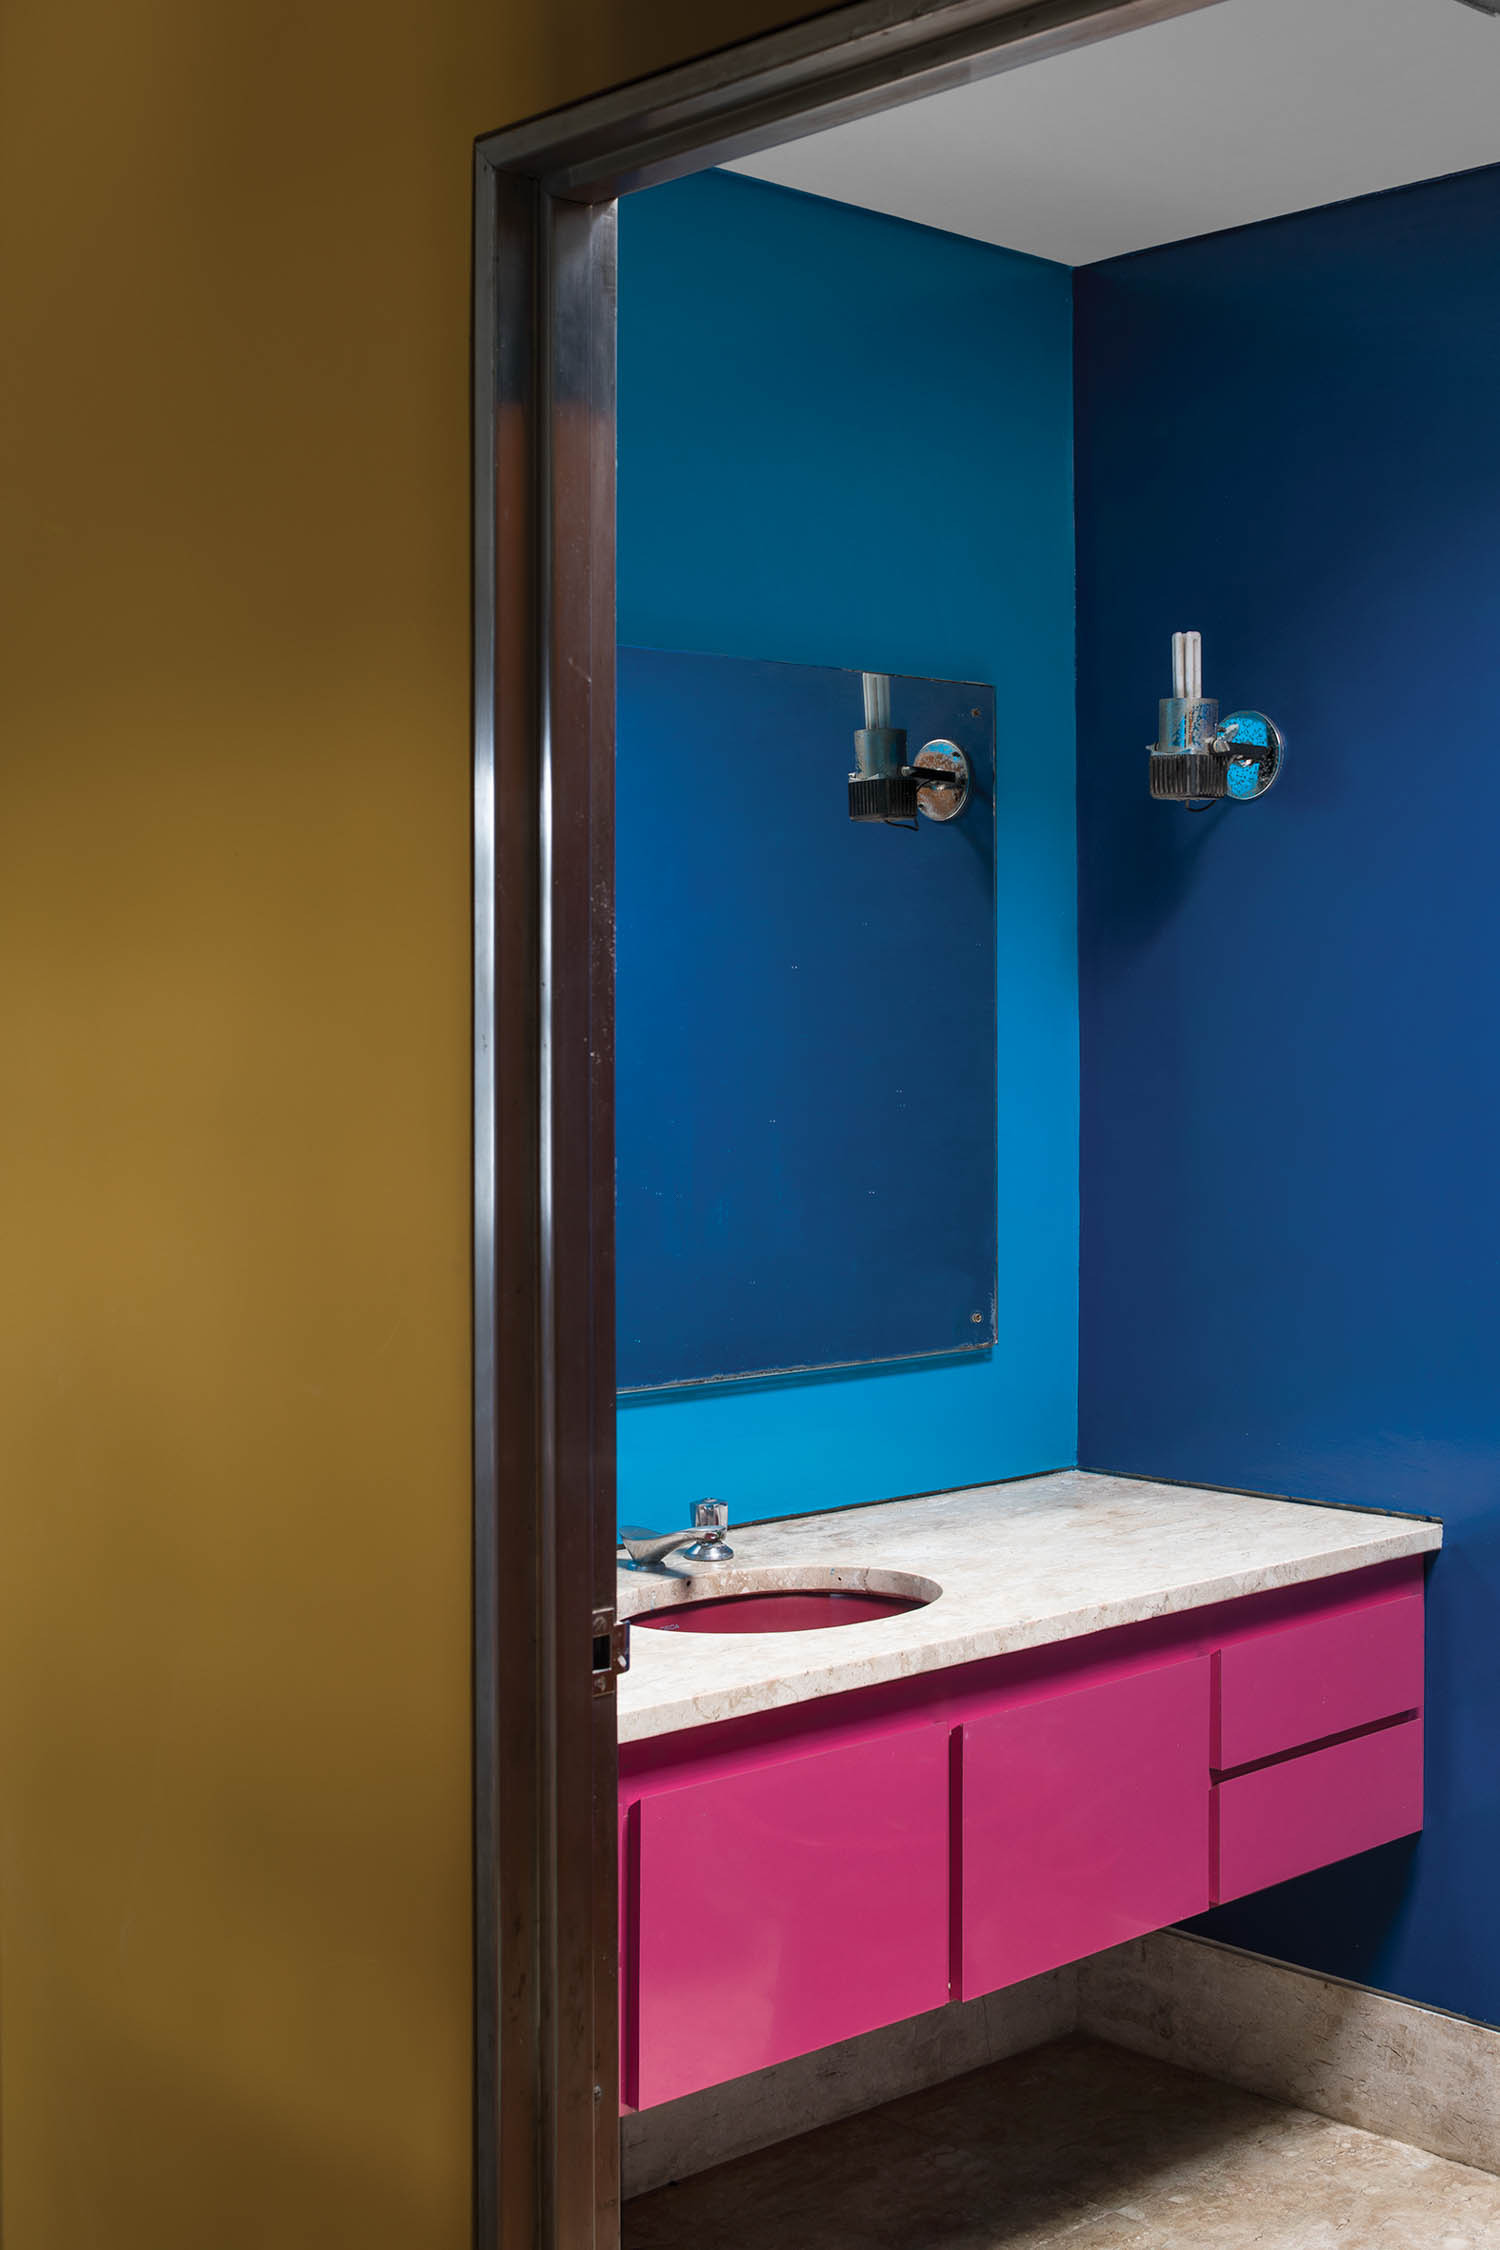 a pink vanity against blue walls in a bathroom